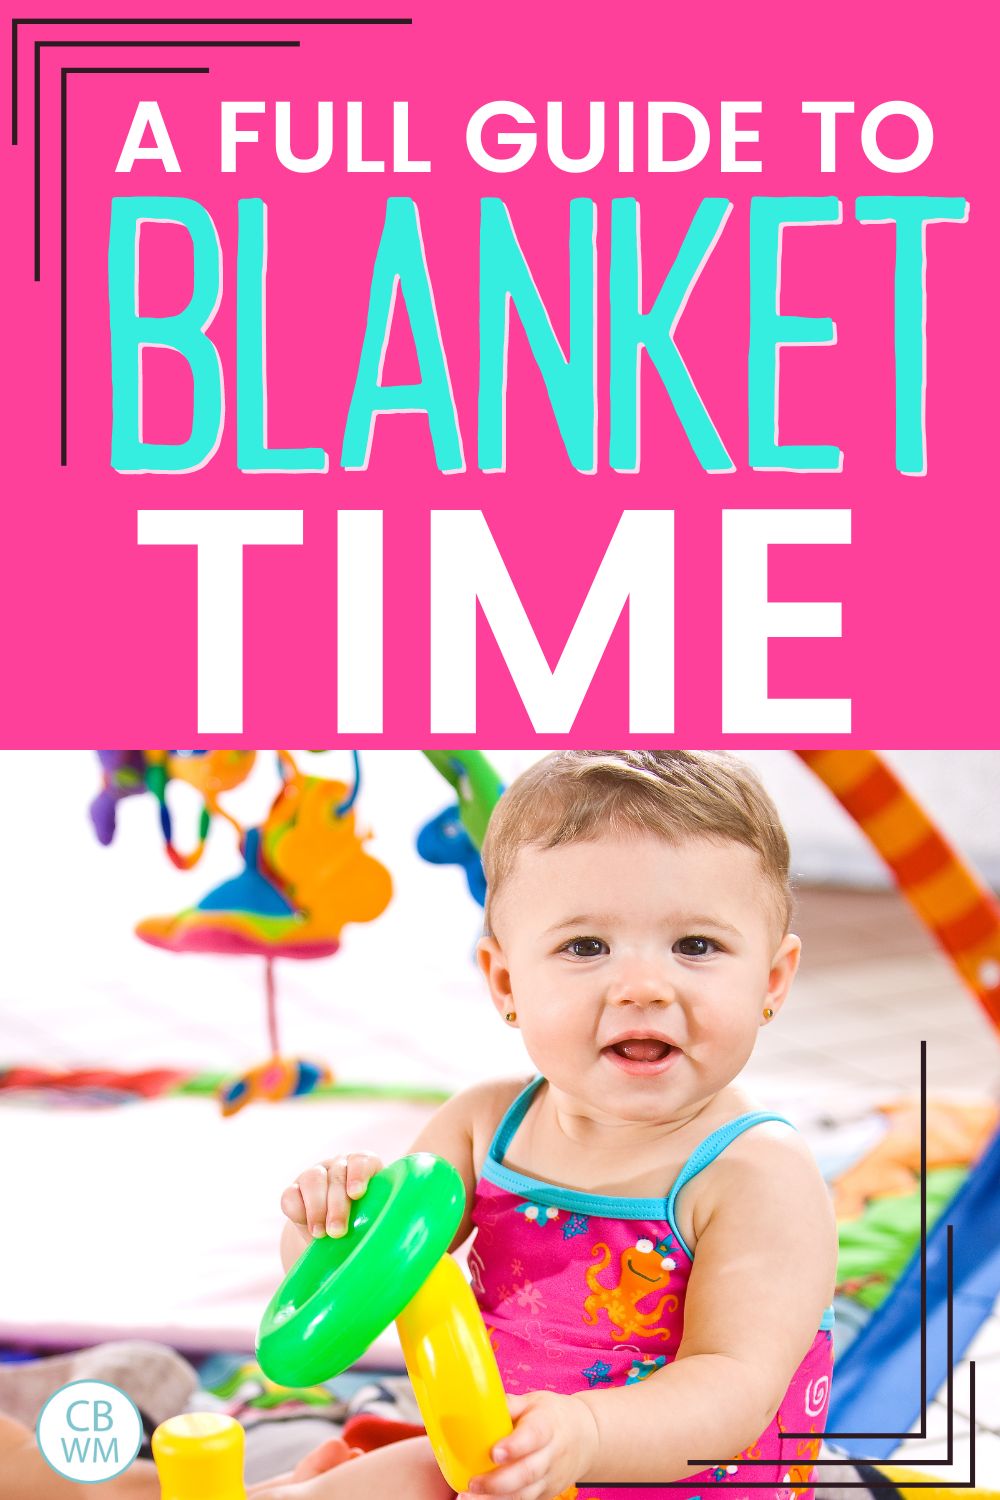 Blanket time guide pinnable image